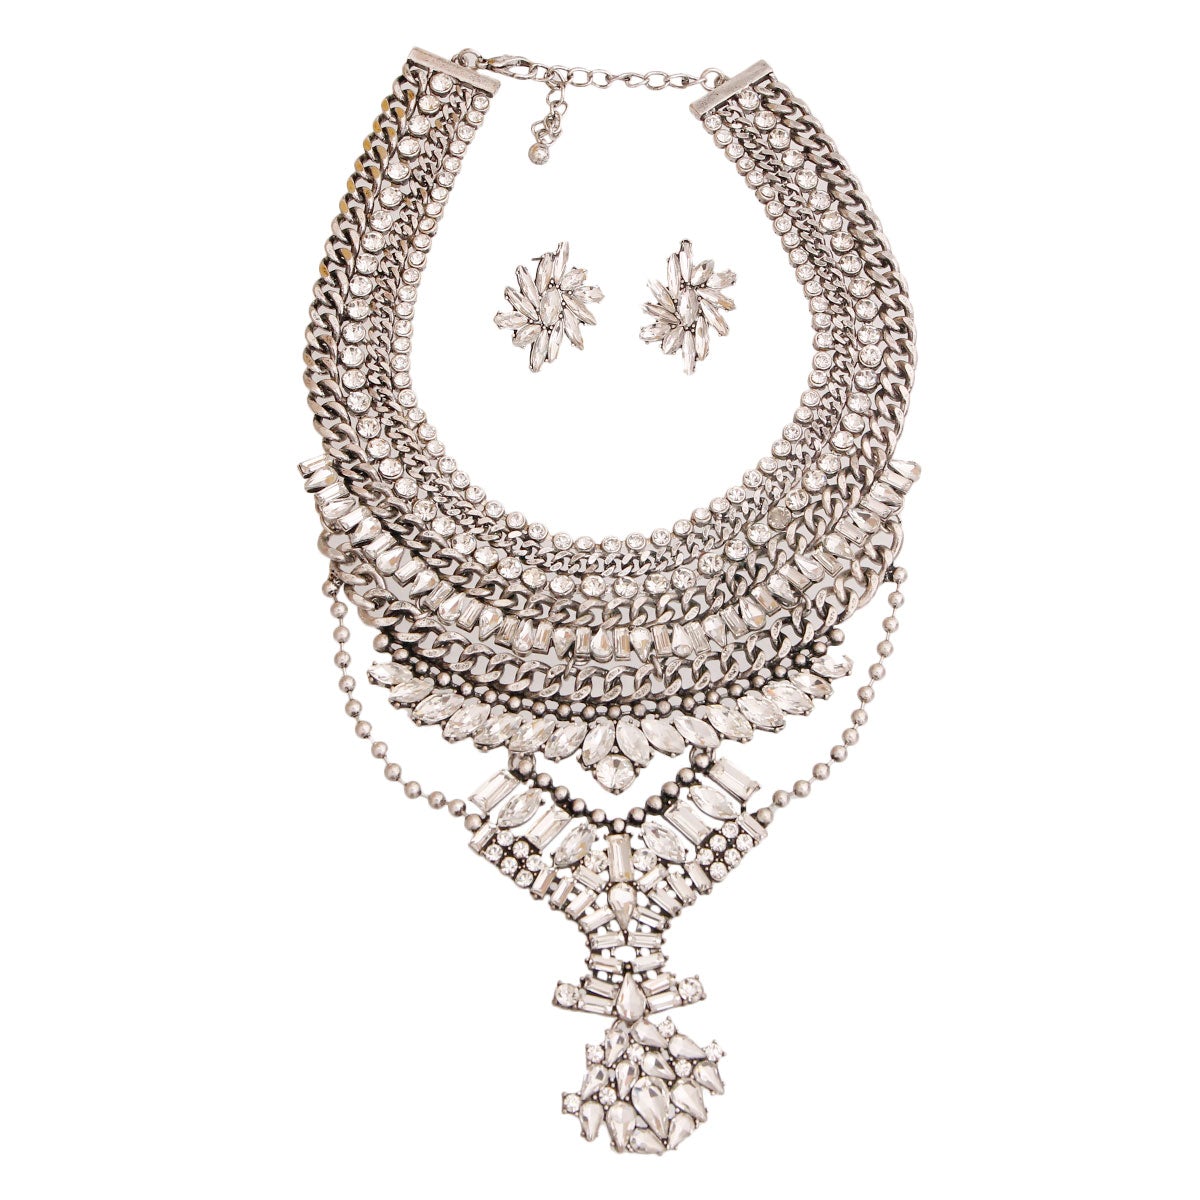 Burnished Silver Crystal Bib Necklace